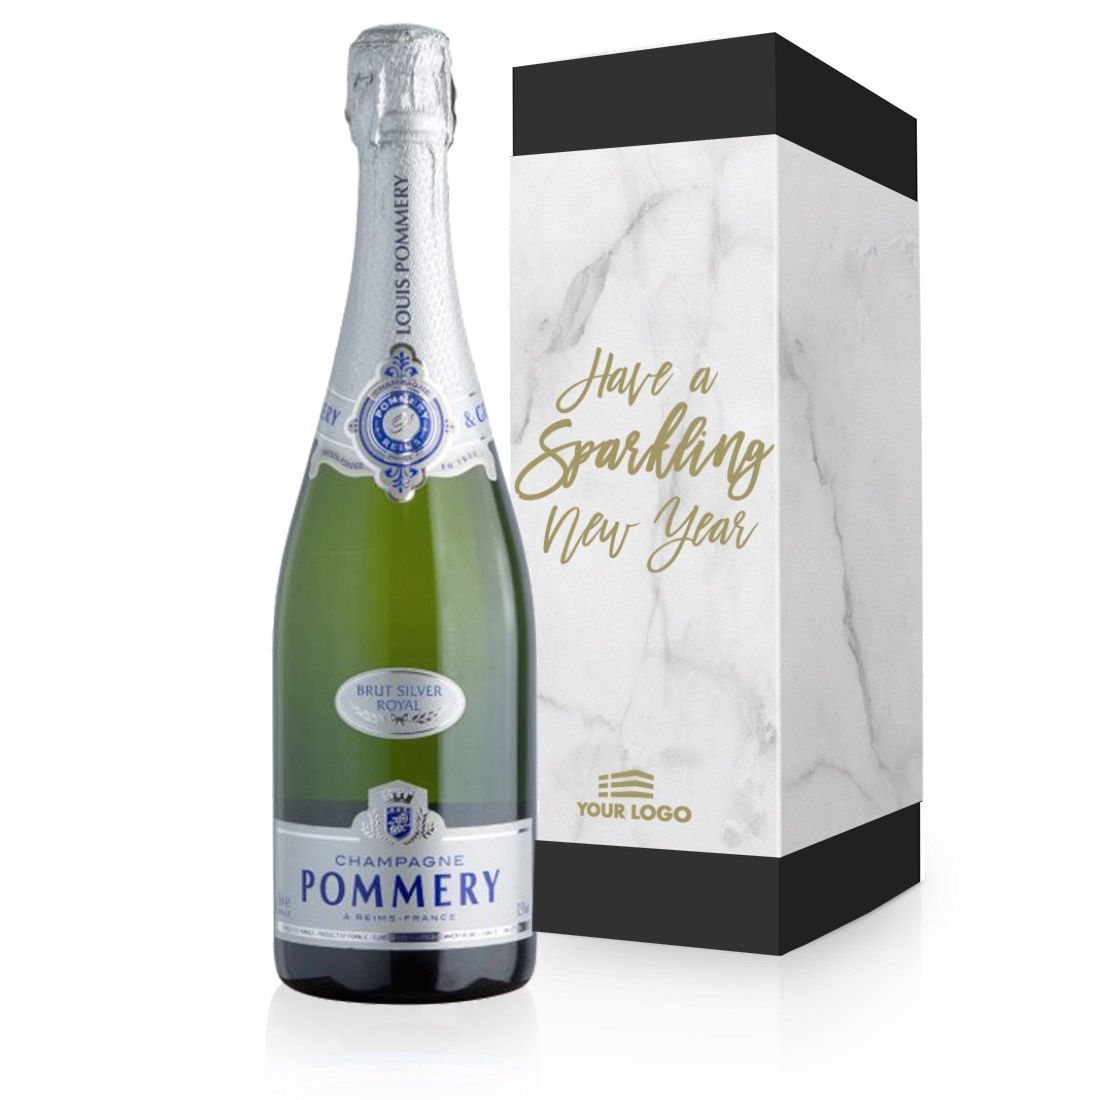 Pommery Royal Brut Silver Champagne